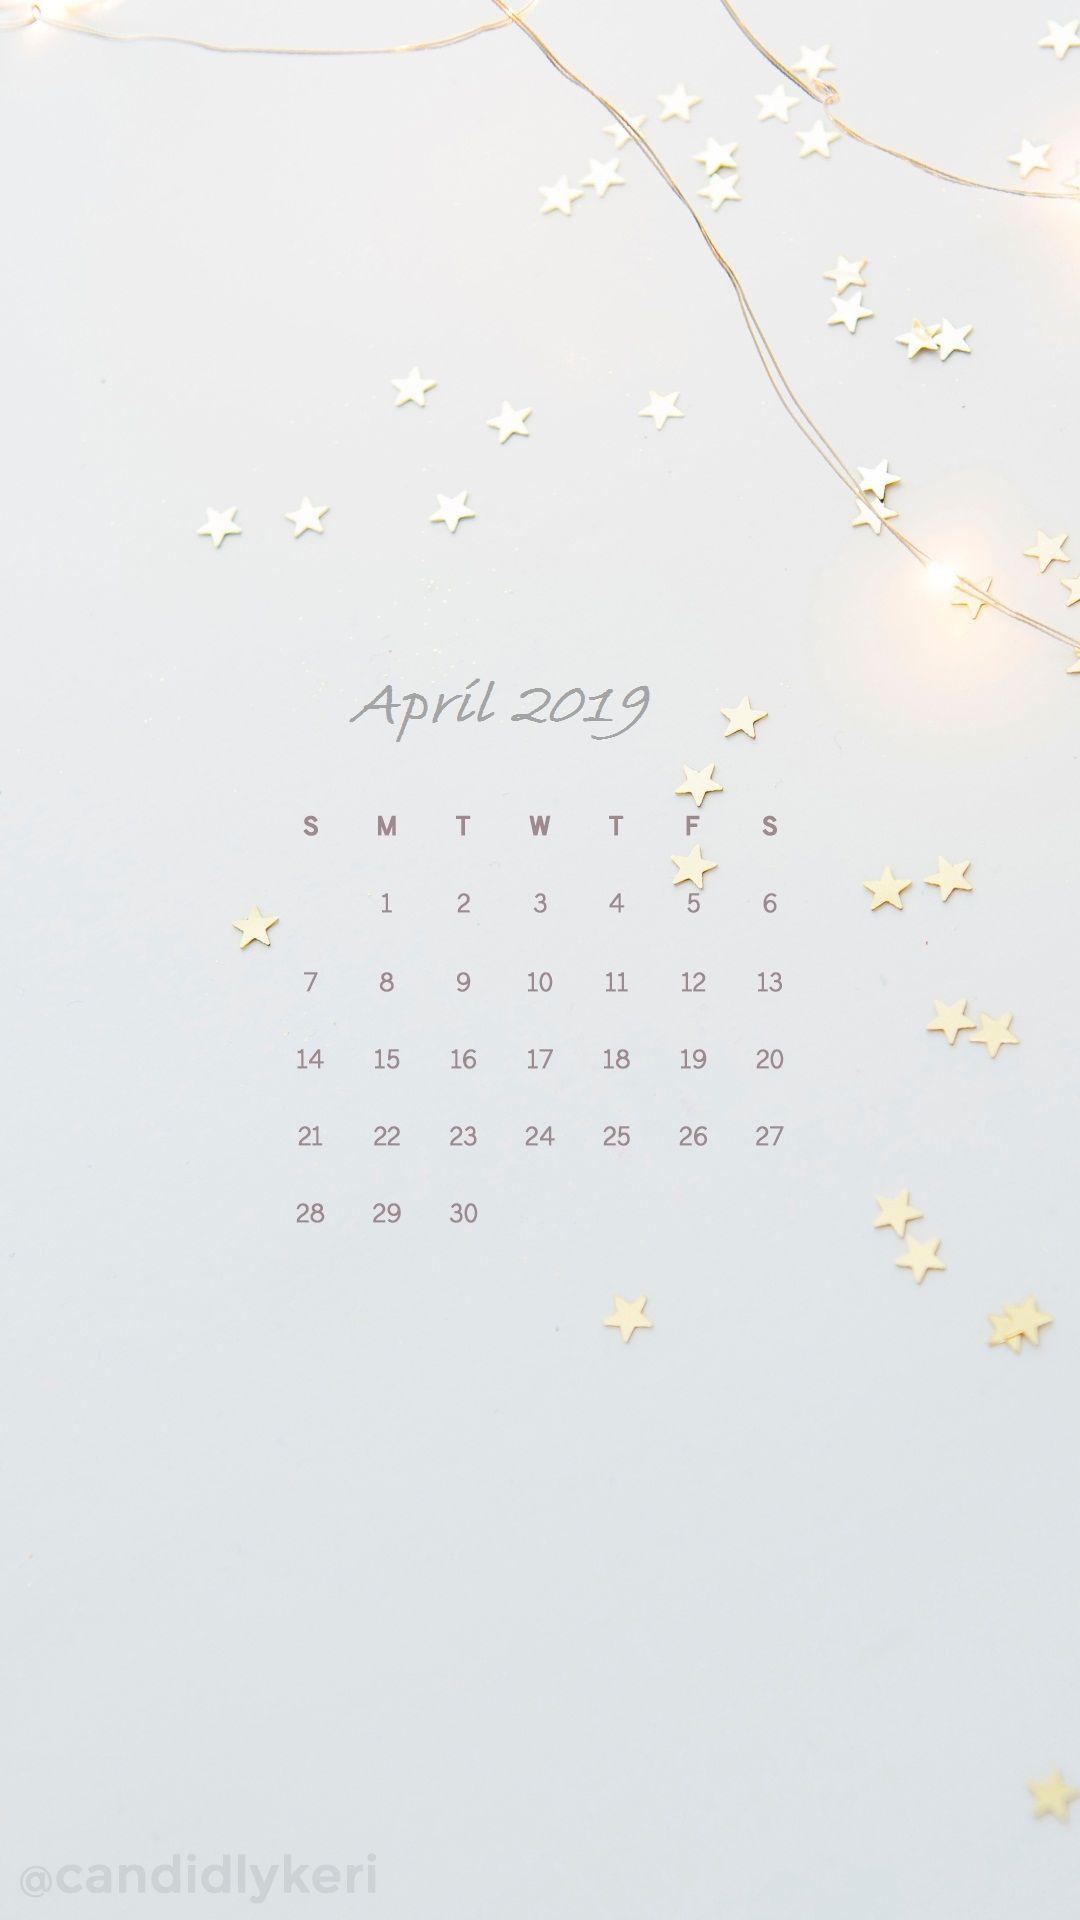 april 2019 iphone calendar wallpaper calendar 2019april 2019 iphone